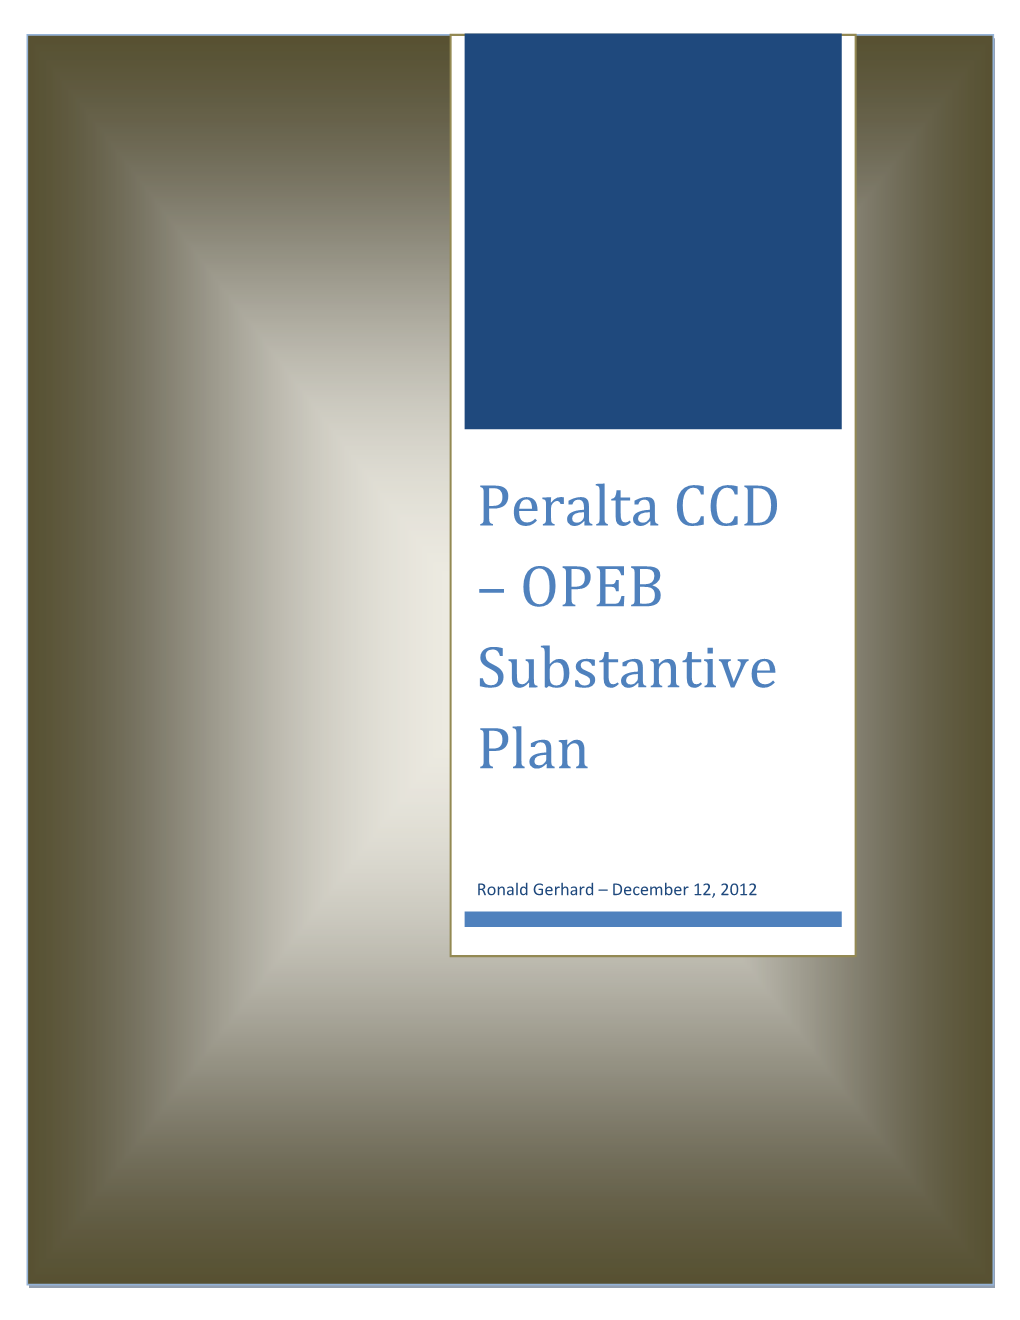 Peralta CCD – OPEB Substantive Plan